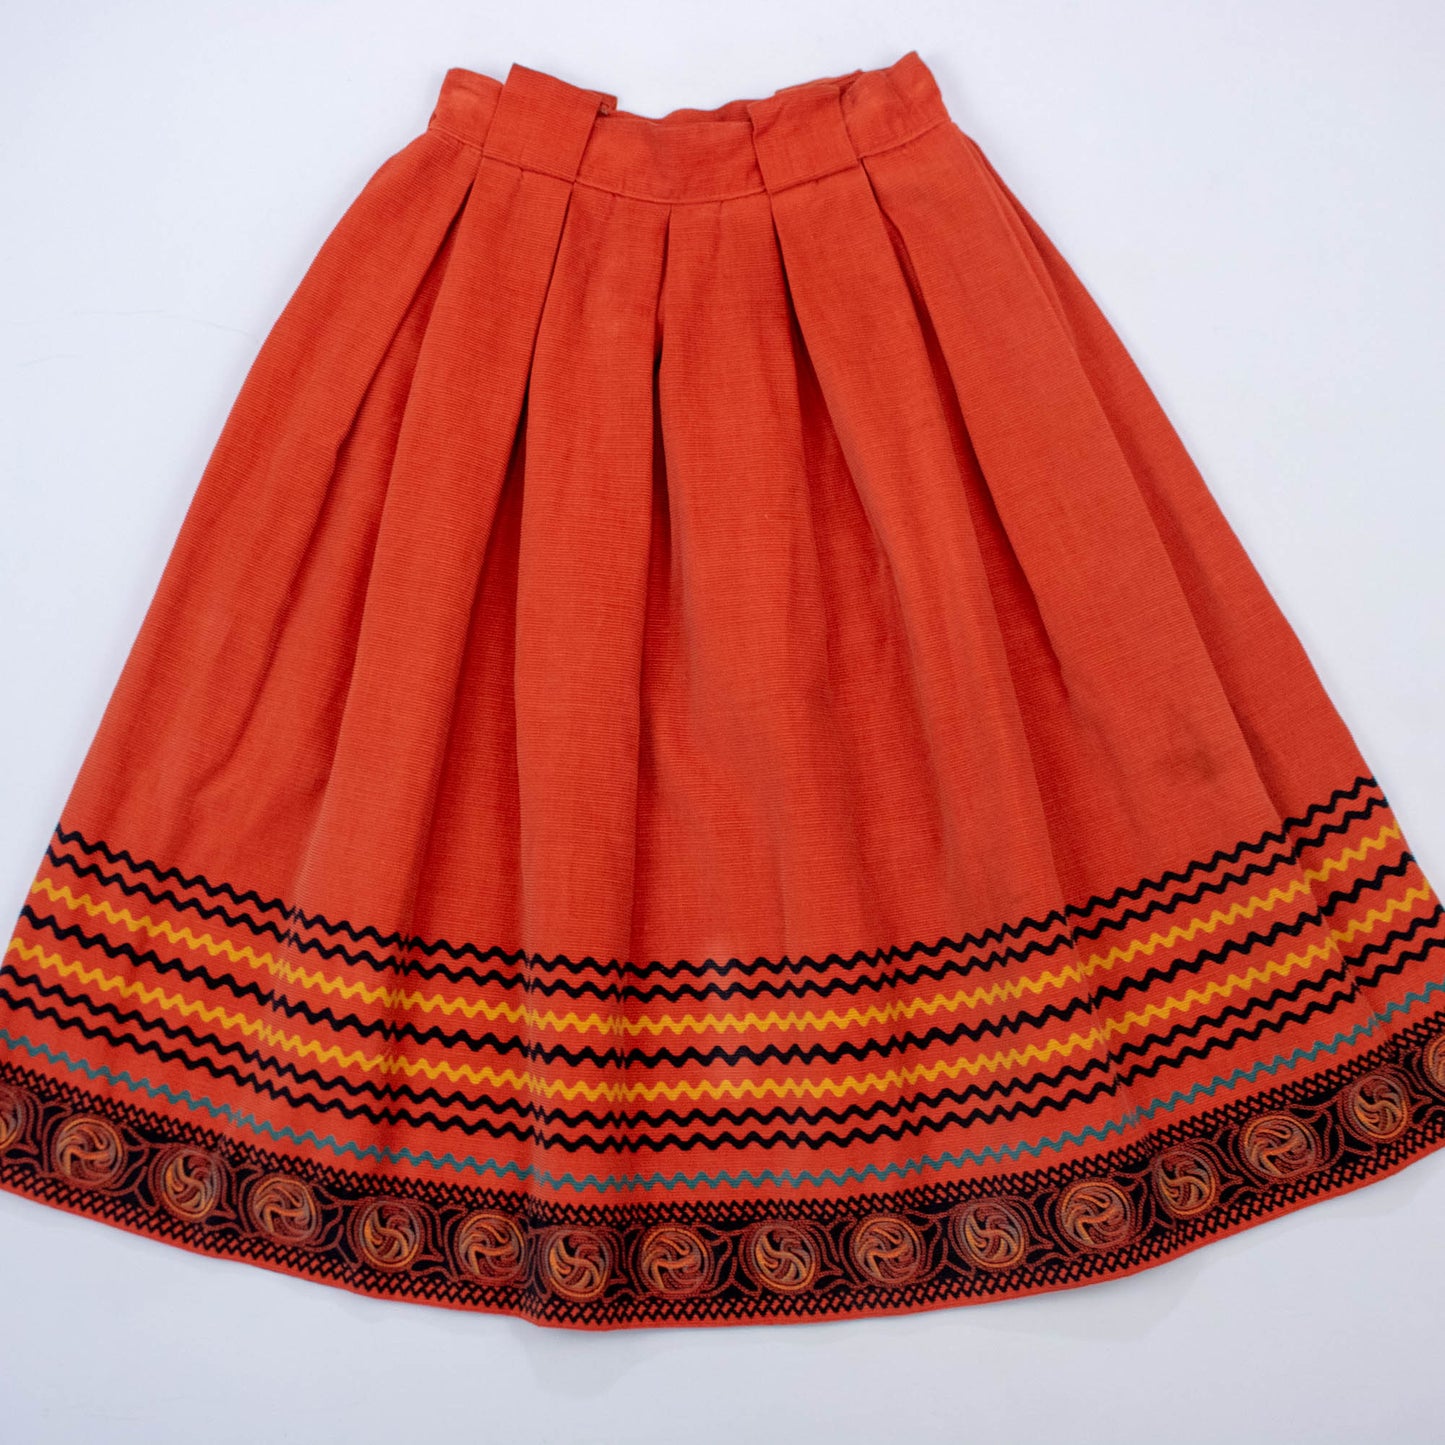 Waist sz 24 25 40s 50s Orange Corduroy Skirt